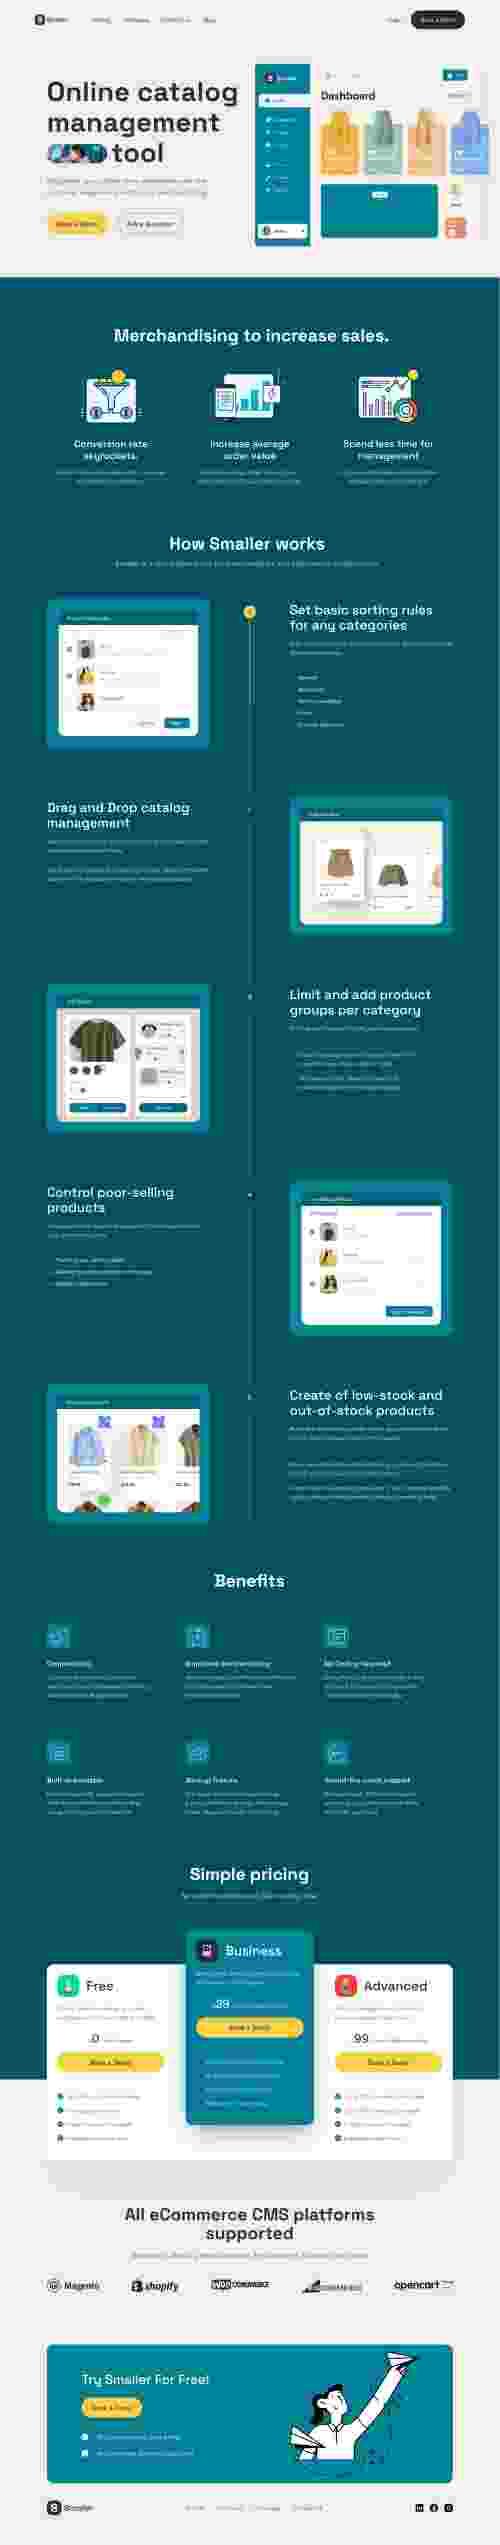 UIHut - Responsive e-Commerce Website UI Design Template - 22229